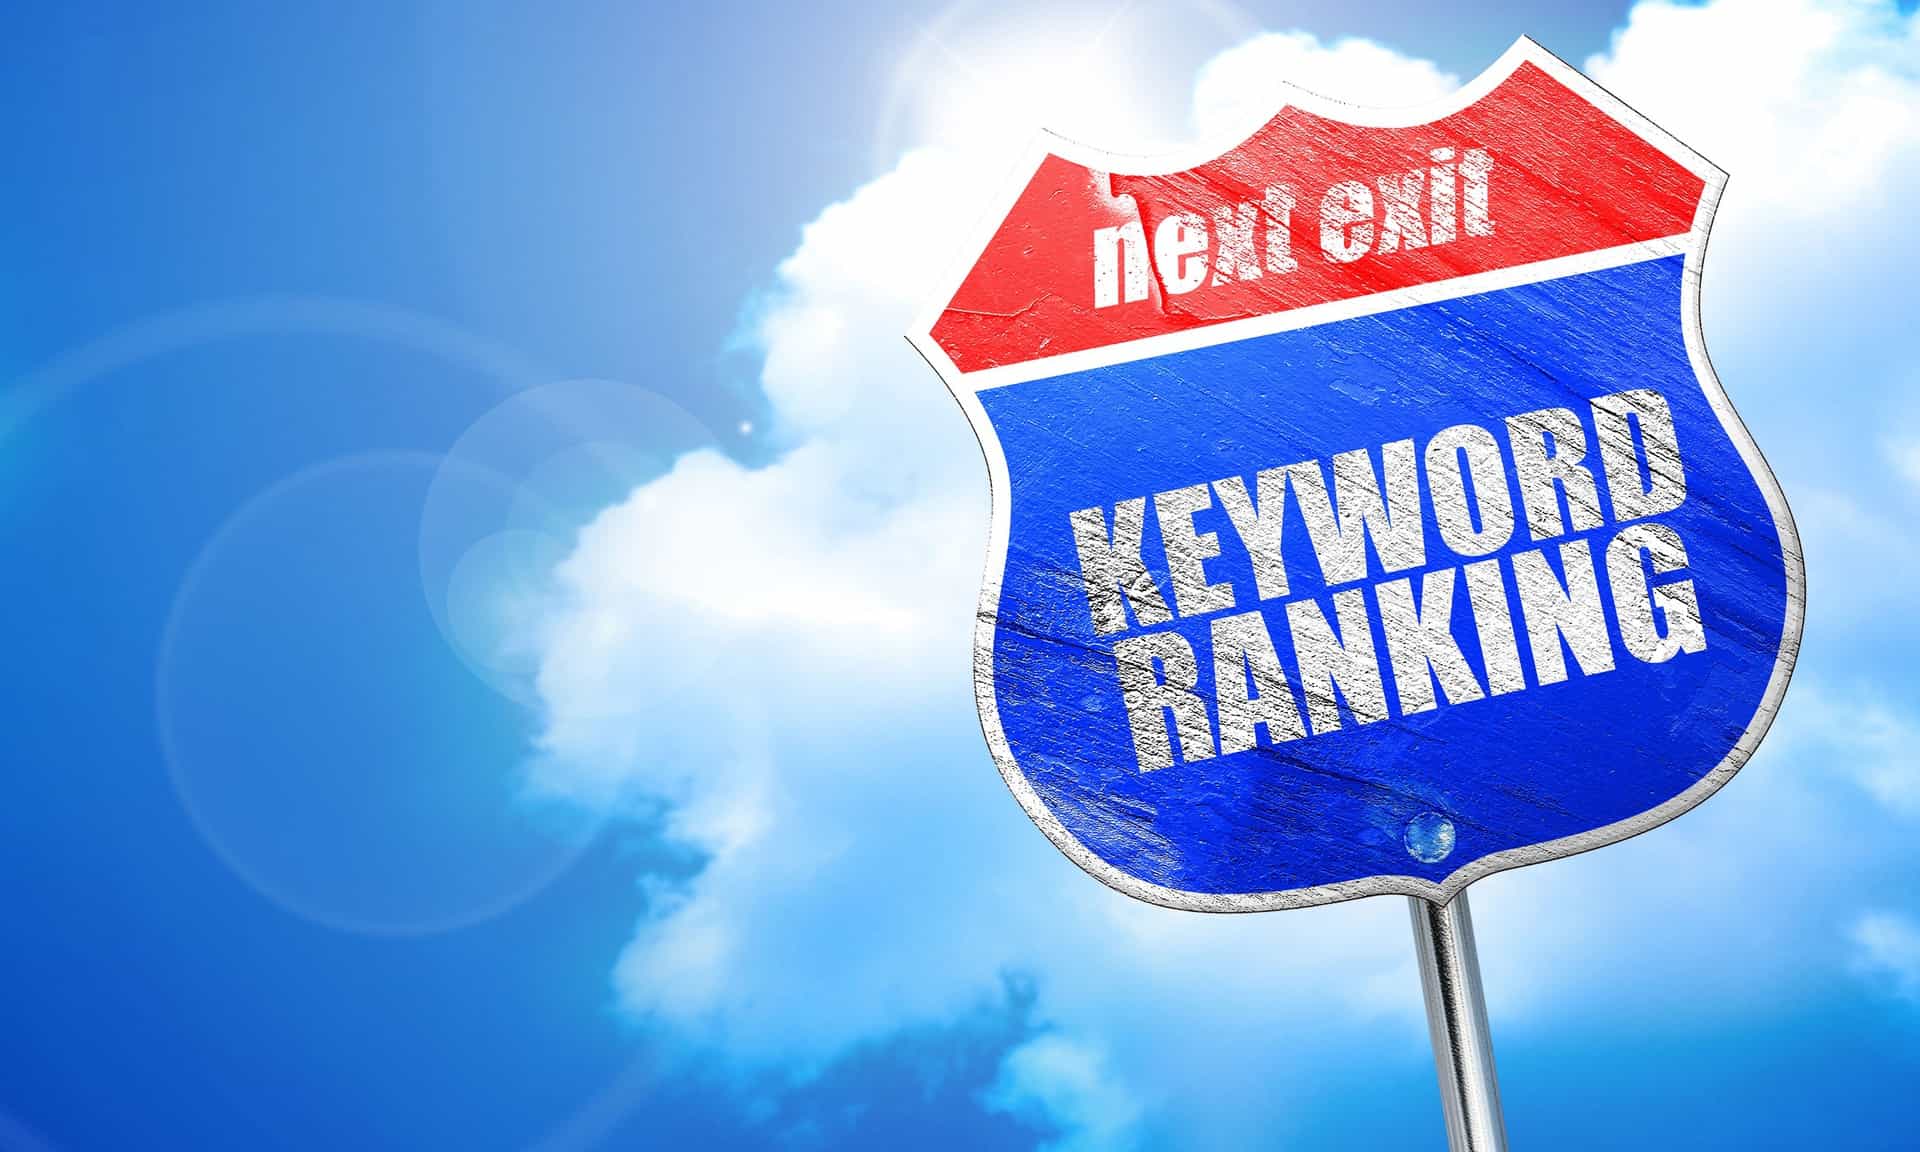 Keyword Rankings